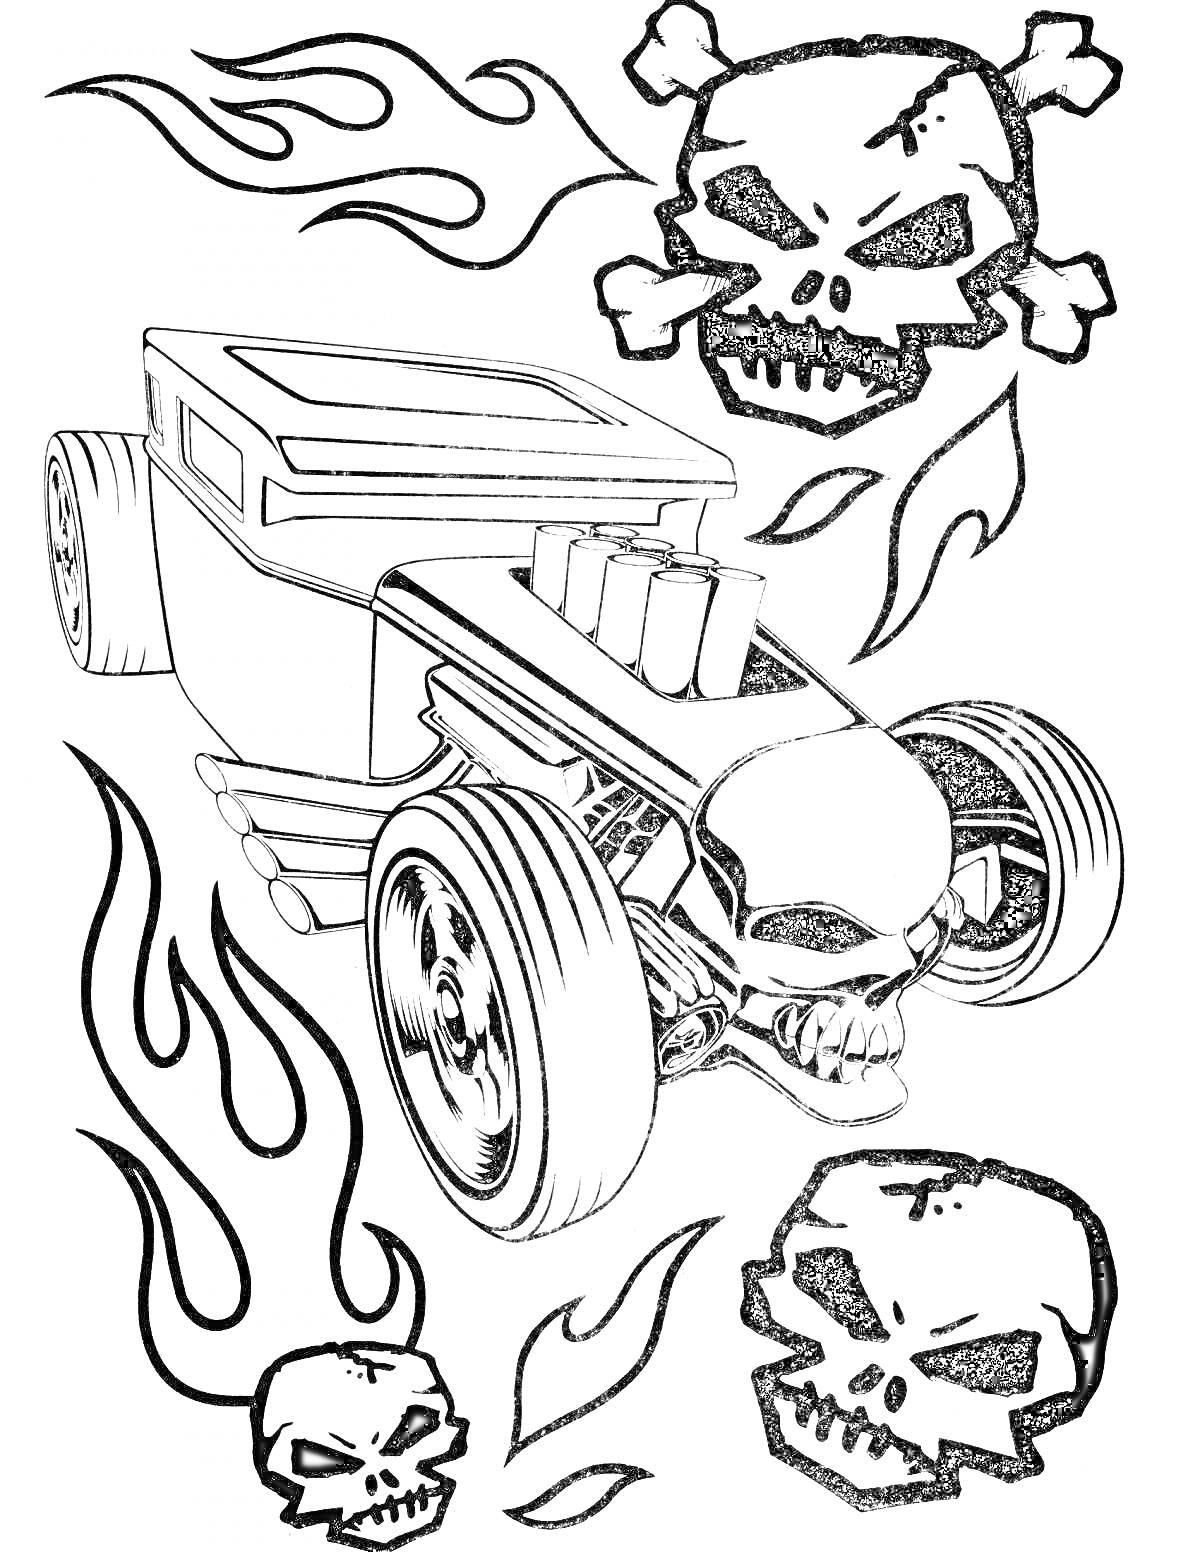 Раскраска Машинка Hot Wheels с элементами черепов и пламени